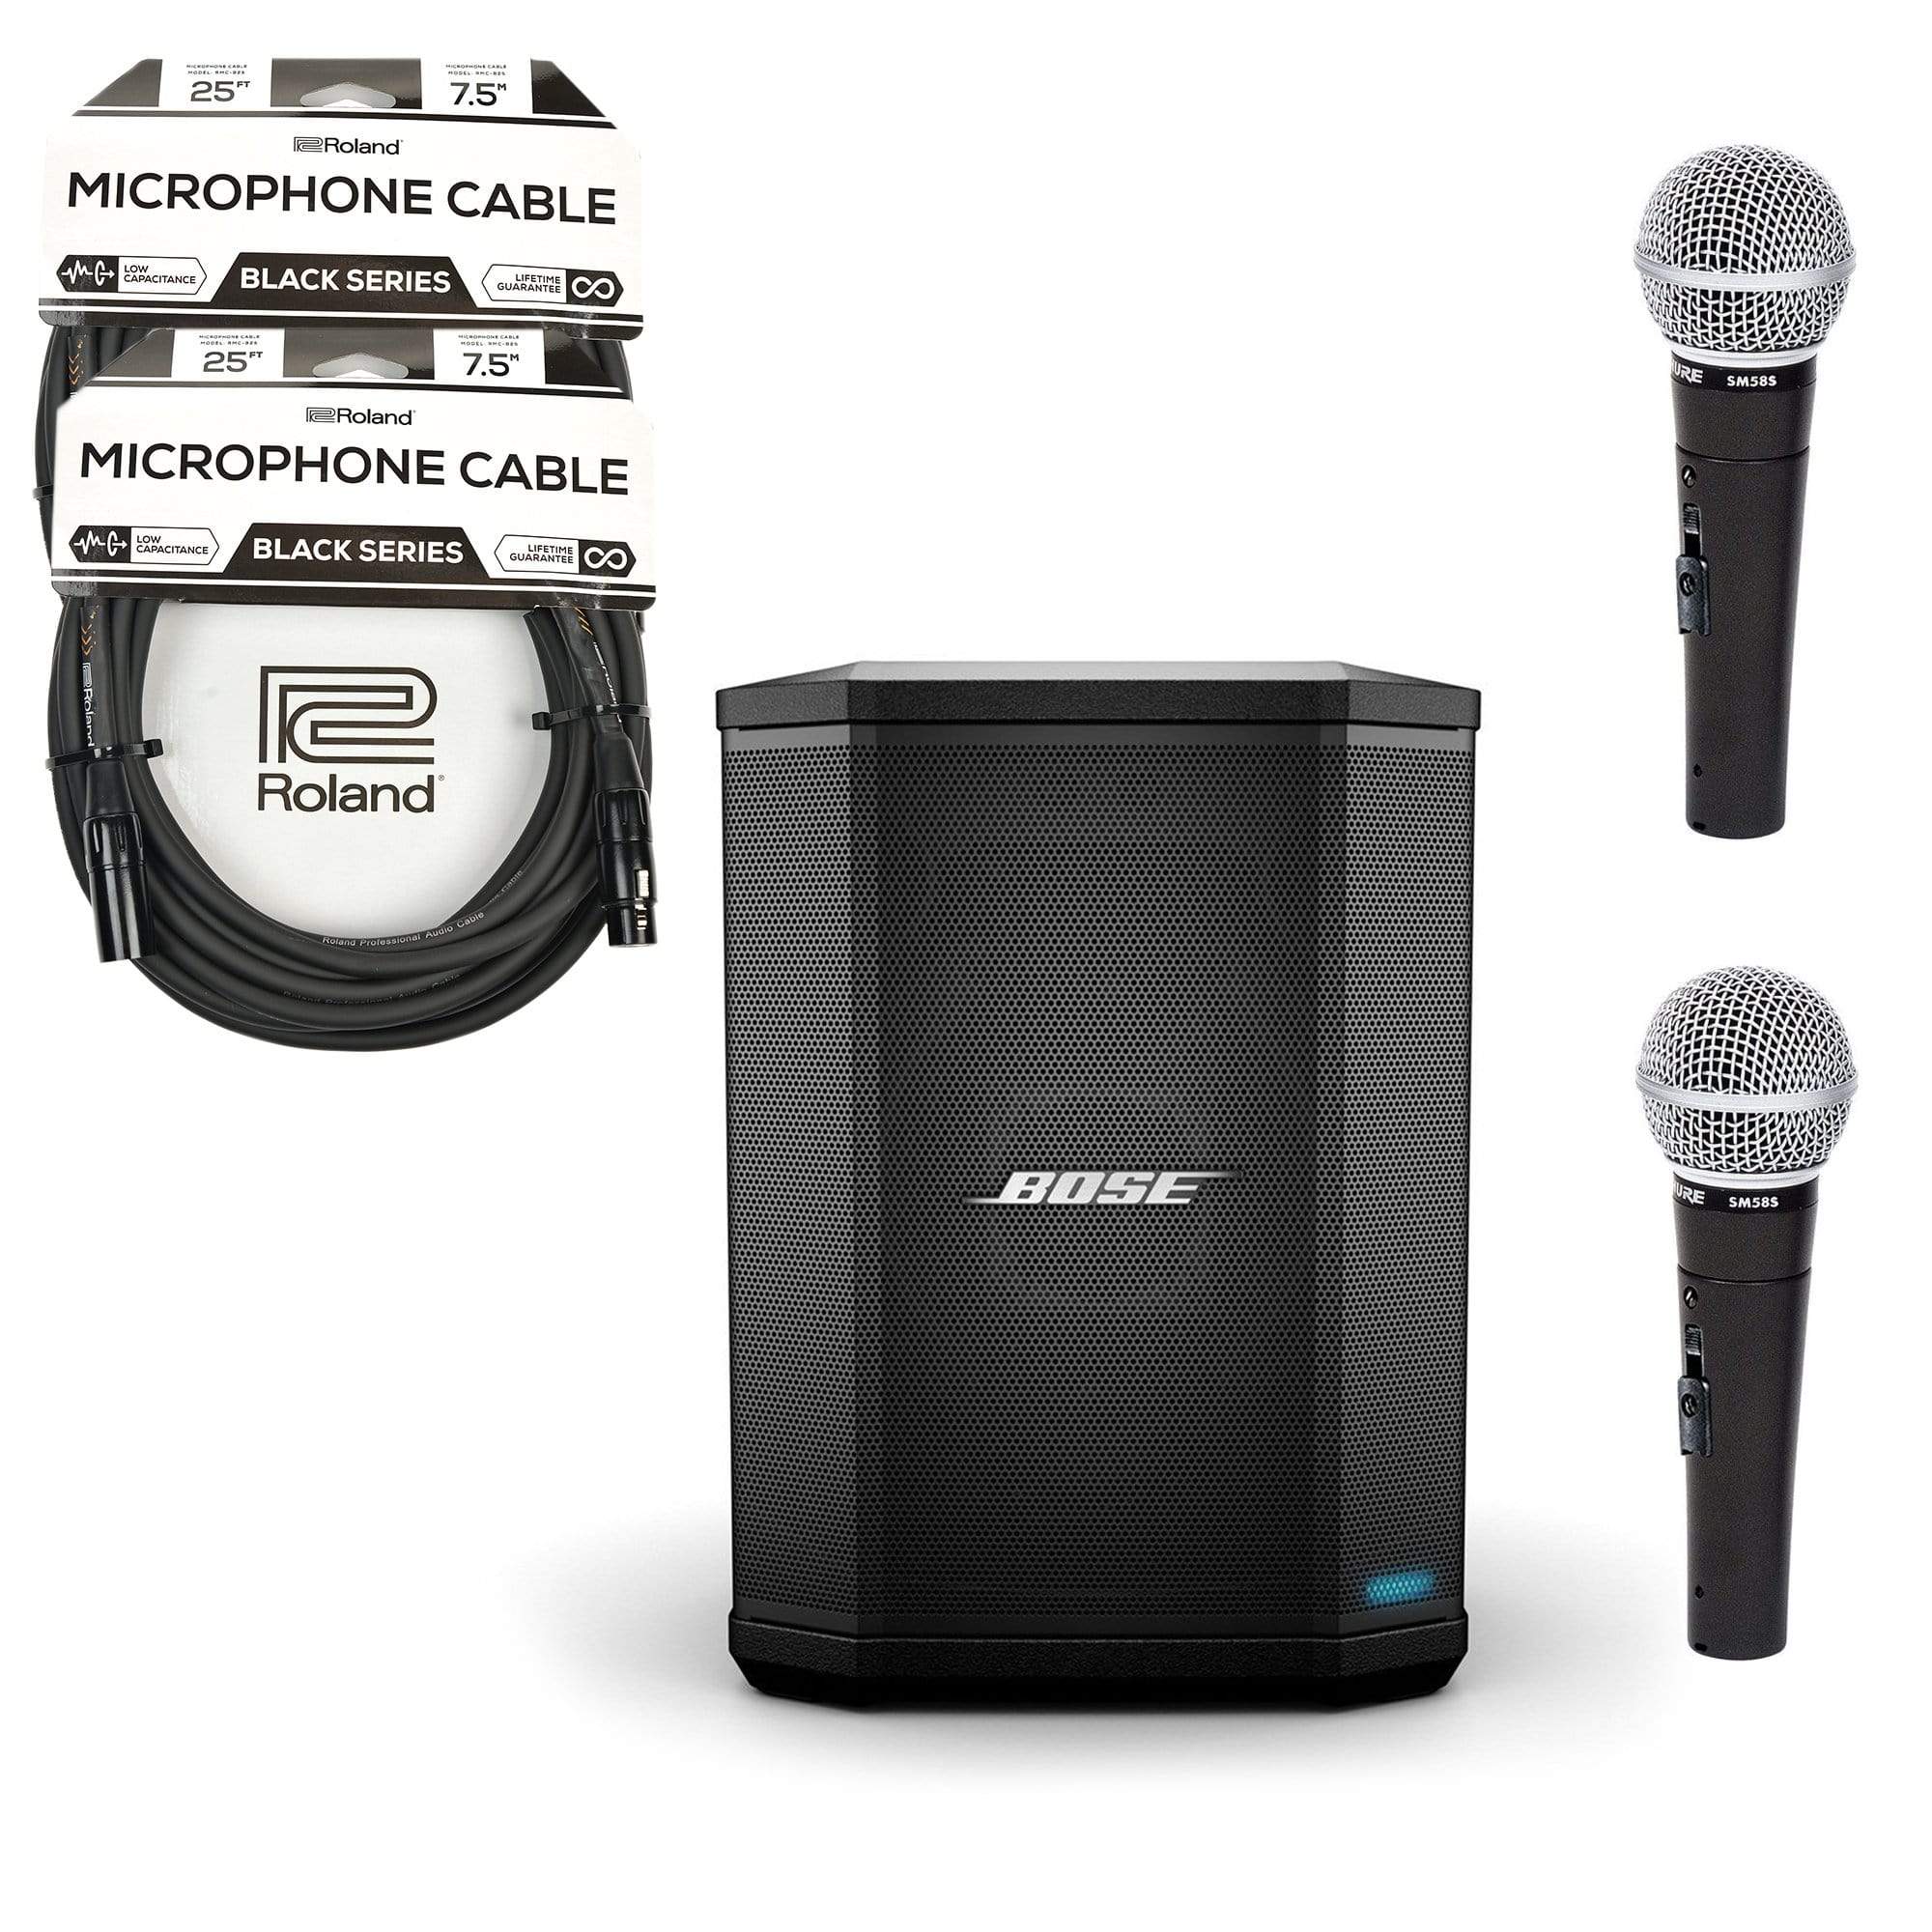 Bose Professional S1 Pro Portable Bluetooth PA System, Black